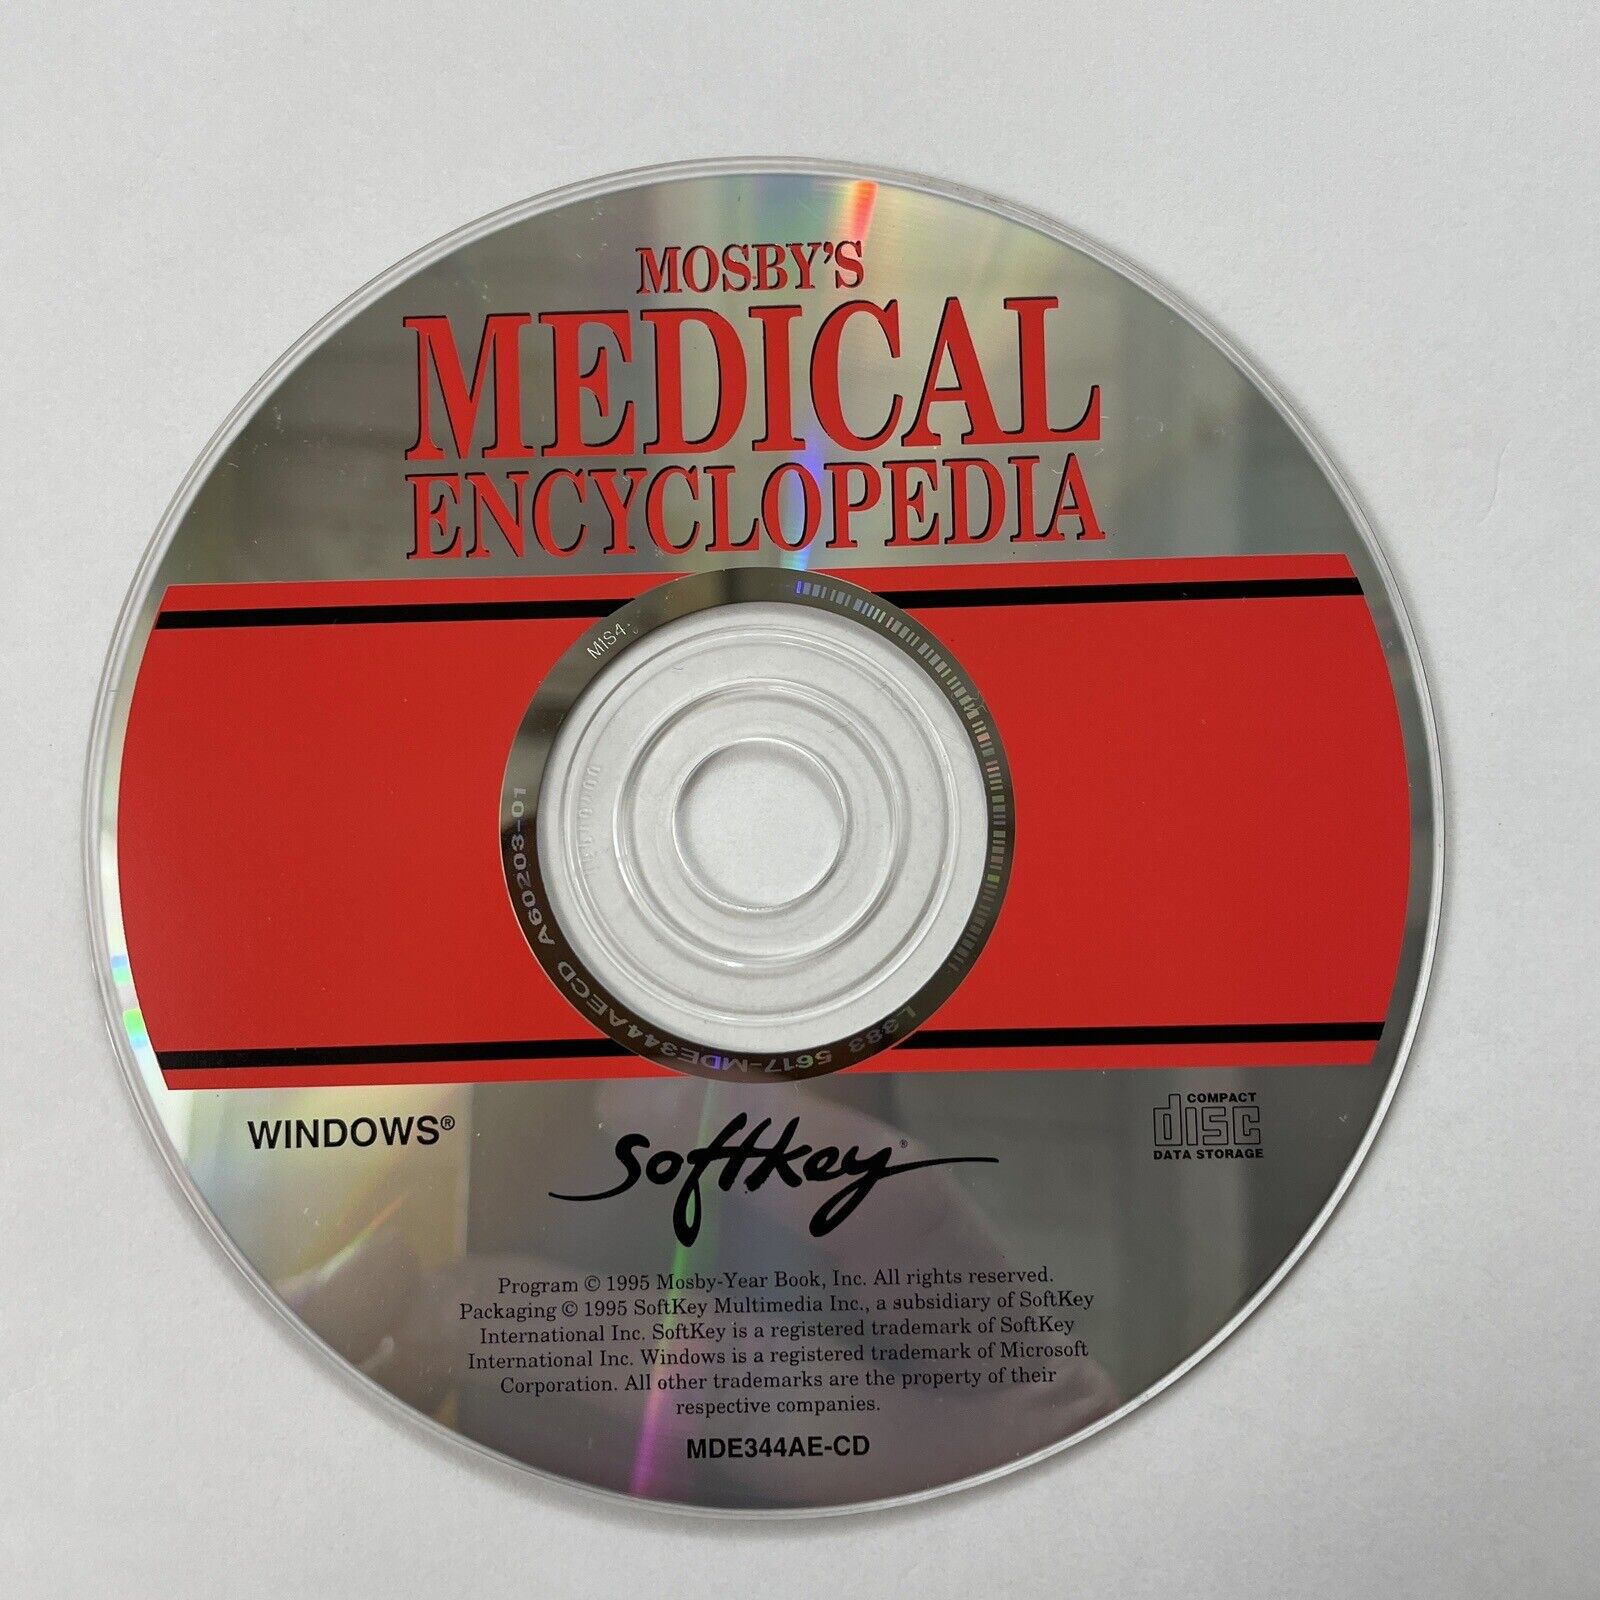 Vintage 1995 Mosby’s Medical Encyclopedia CD-ROM - Windows 3.1 (or higher)